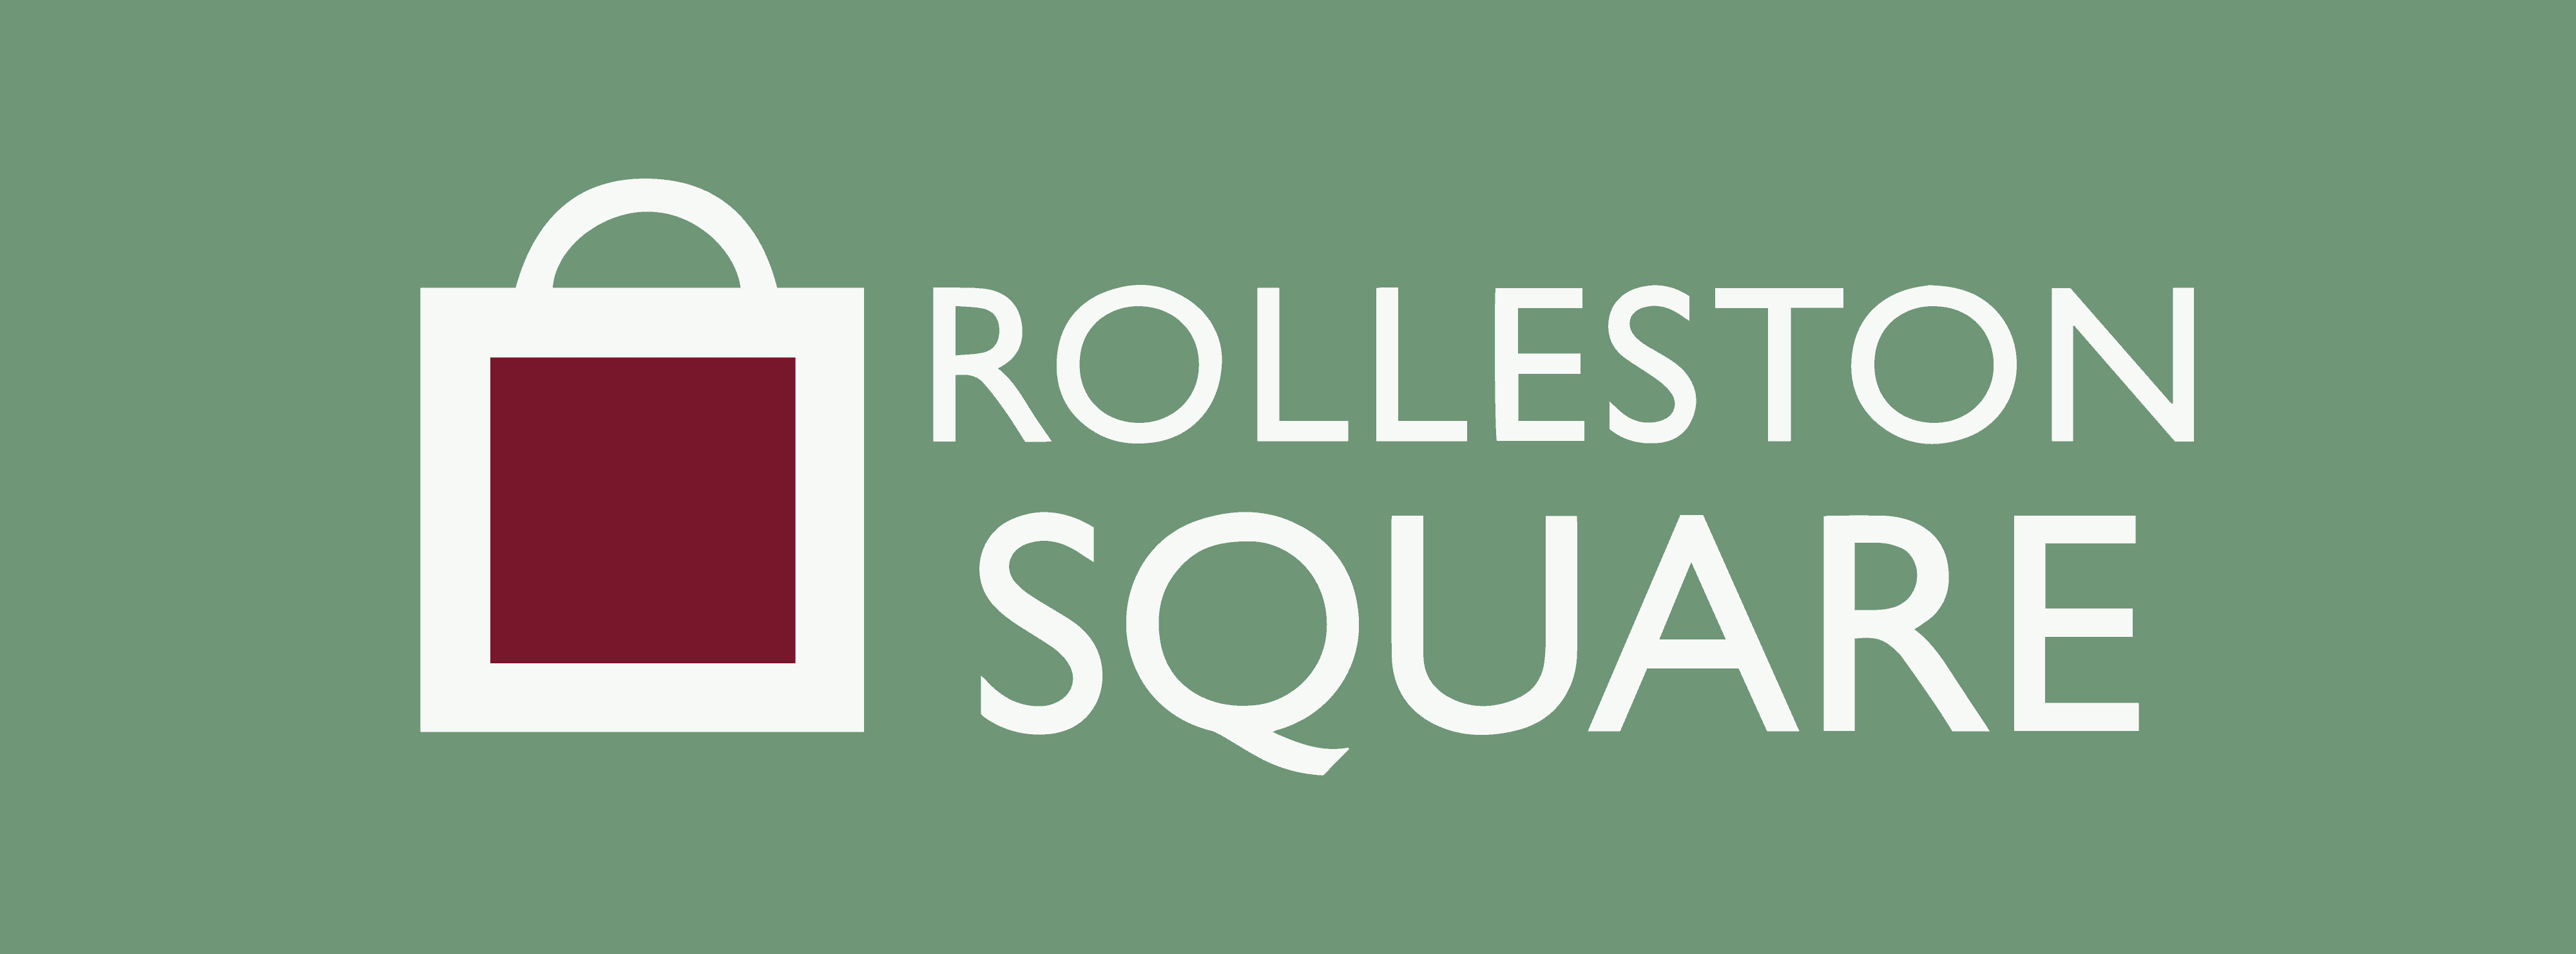 Rolleston Square